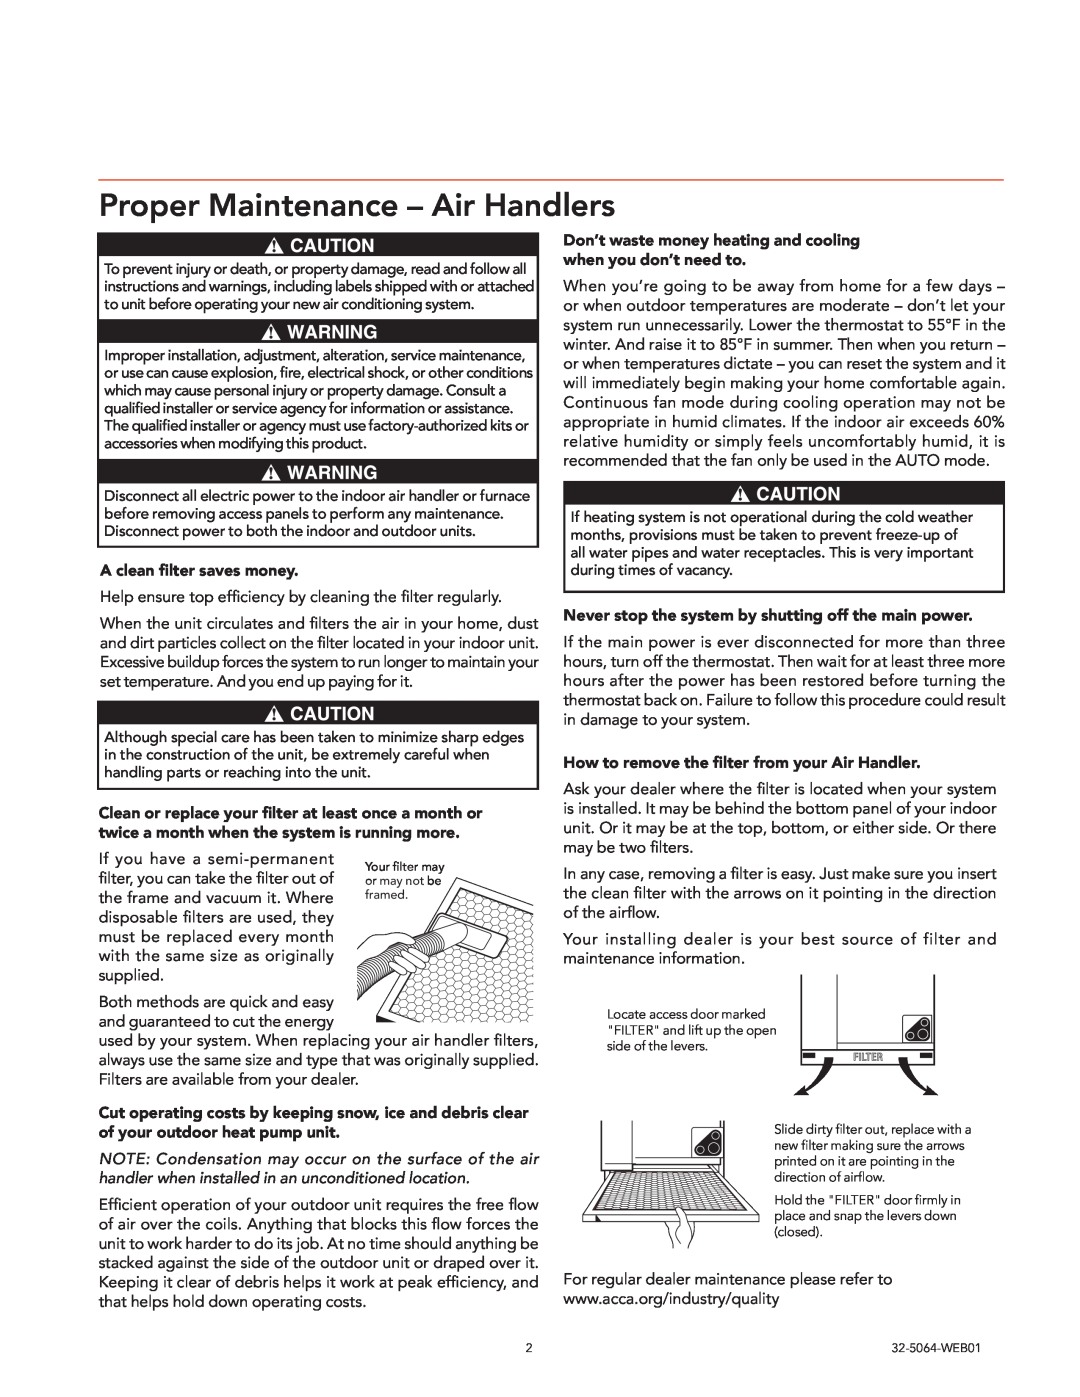 Trane 32-5064-WEB01, Air Handlers Gas Furnaces manual Proper Maintenance - Air Handlers, A clean filter saves money 